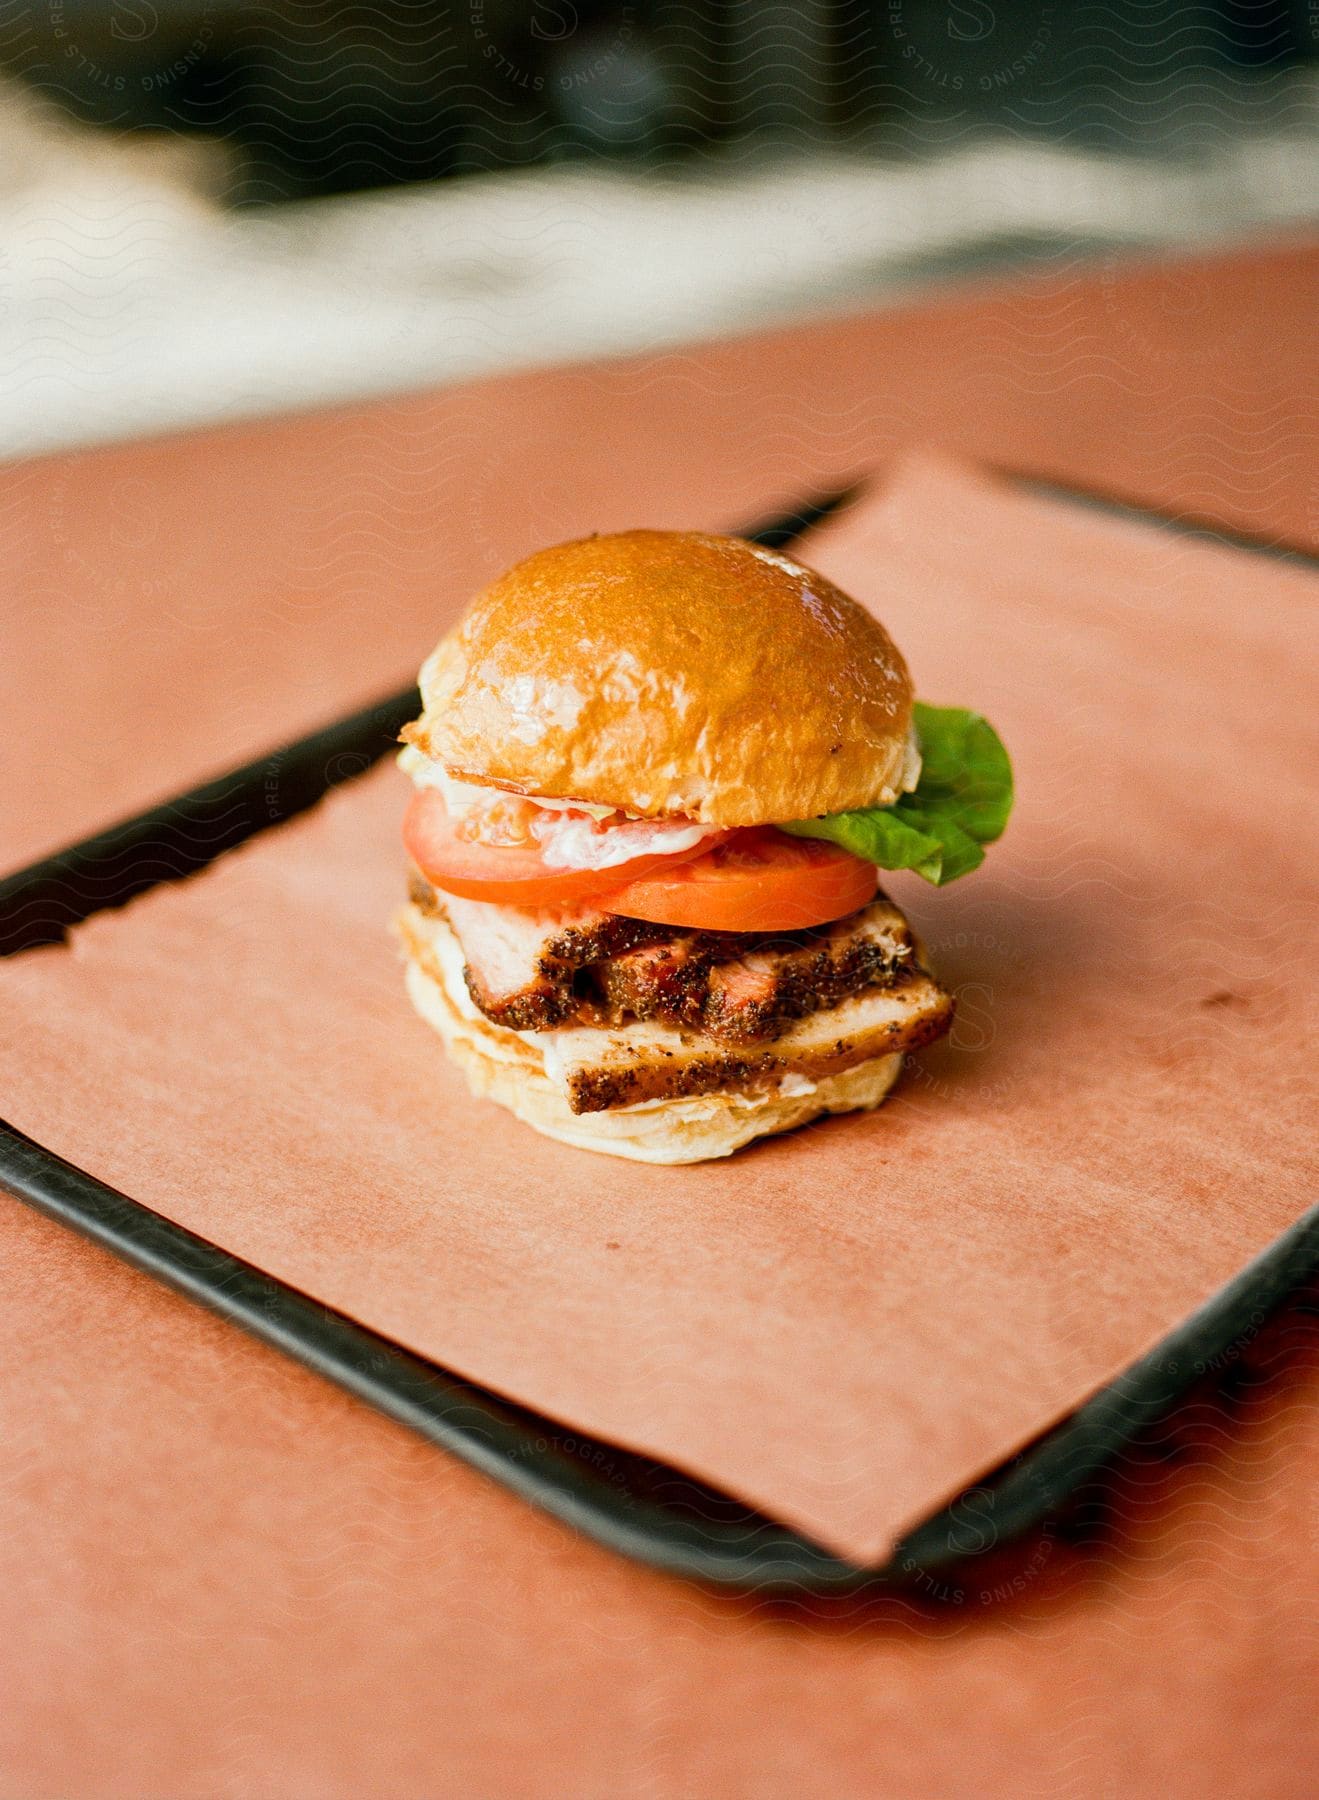 Presentation of a pork hamburger on a table.